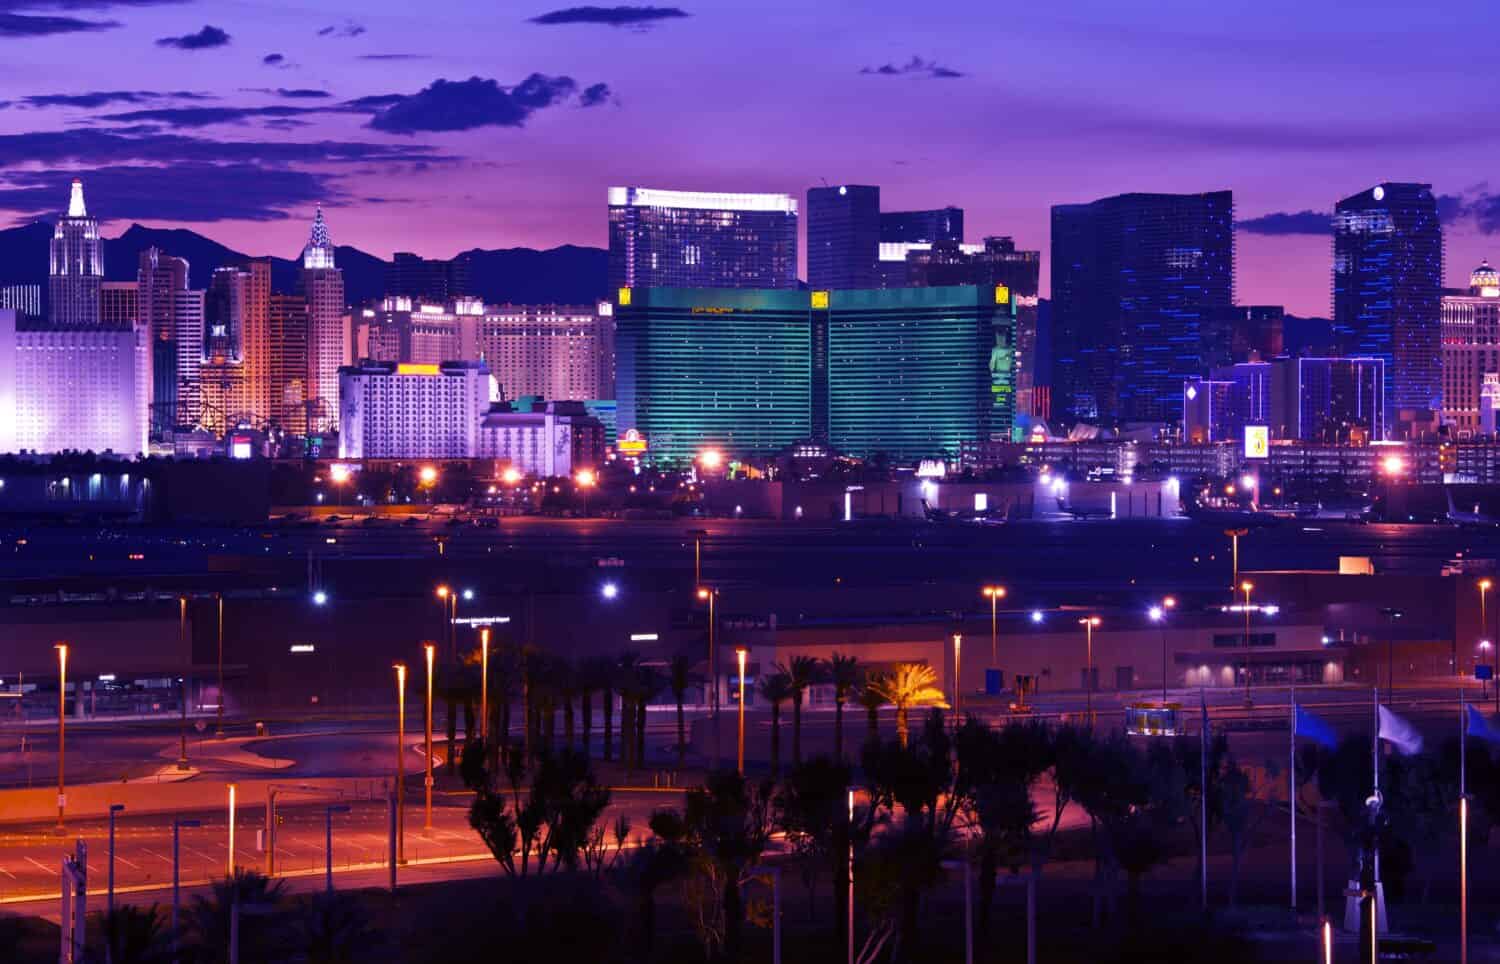 Fontainebleau Las Vegas - Wikipedia